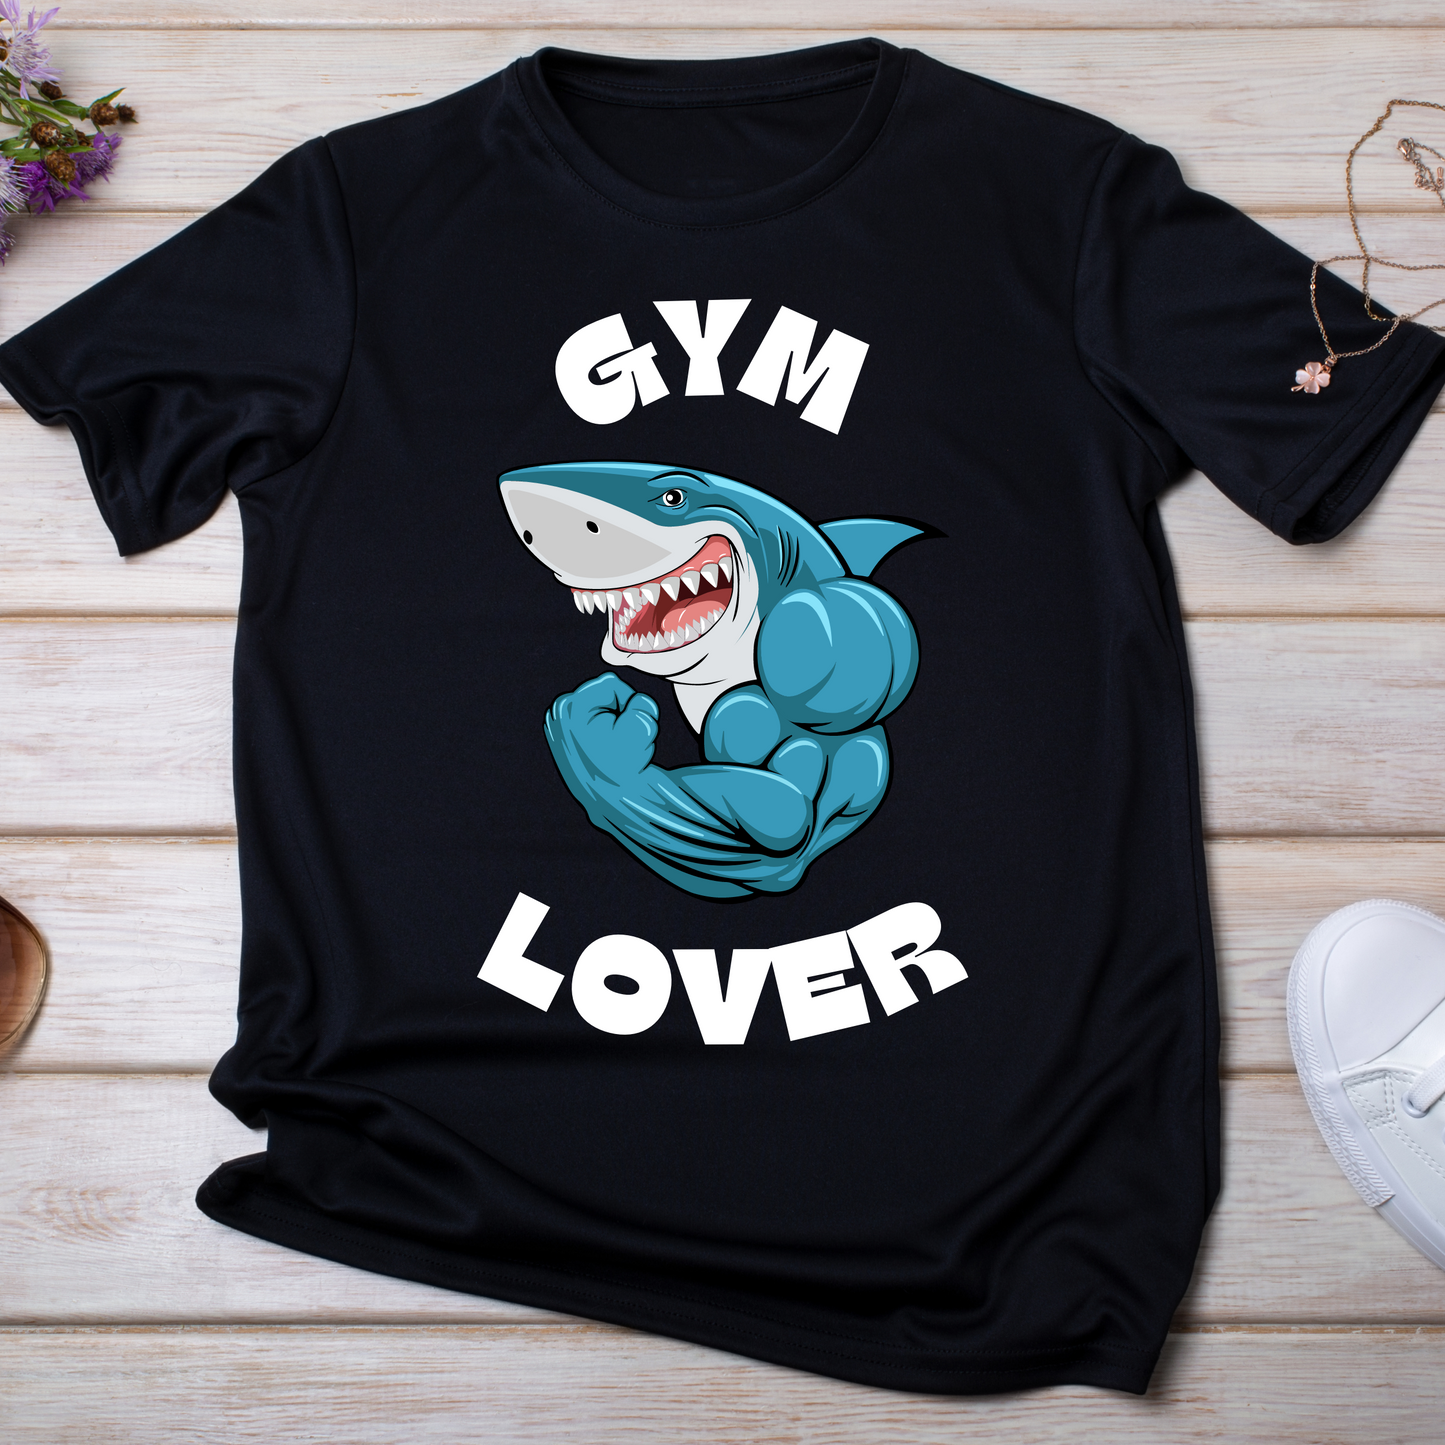 Gym lover shark design Women's t-shirt - Premium t-shirt from Lees Krazy Teez - Just $19.95! Shop now at Lees Krazy Teez